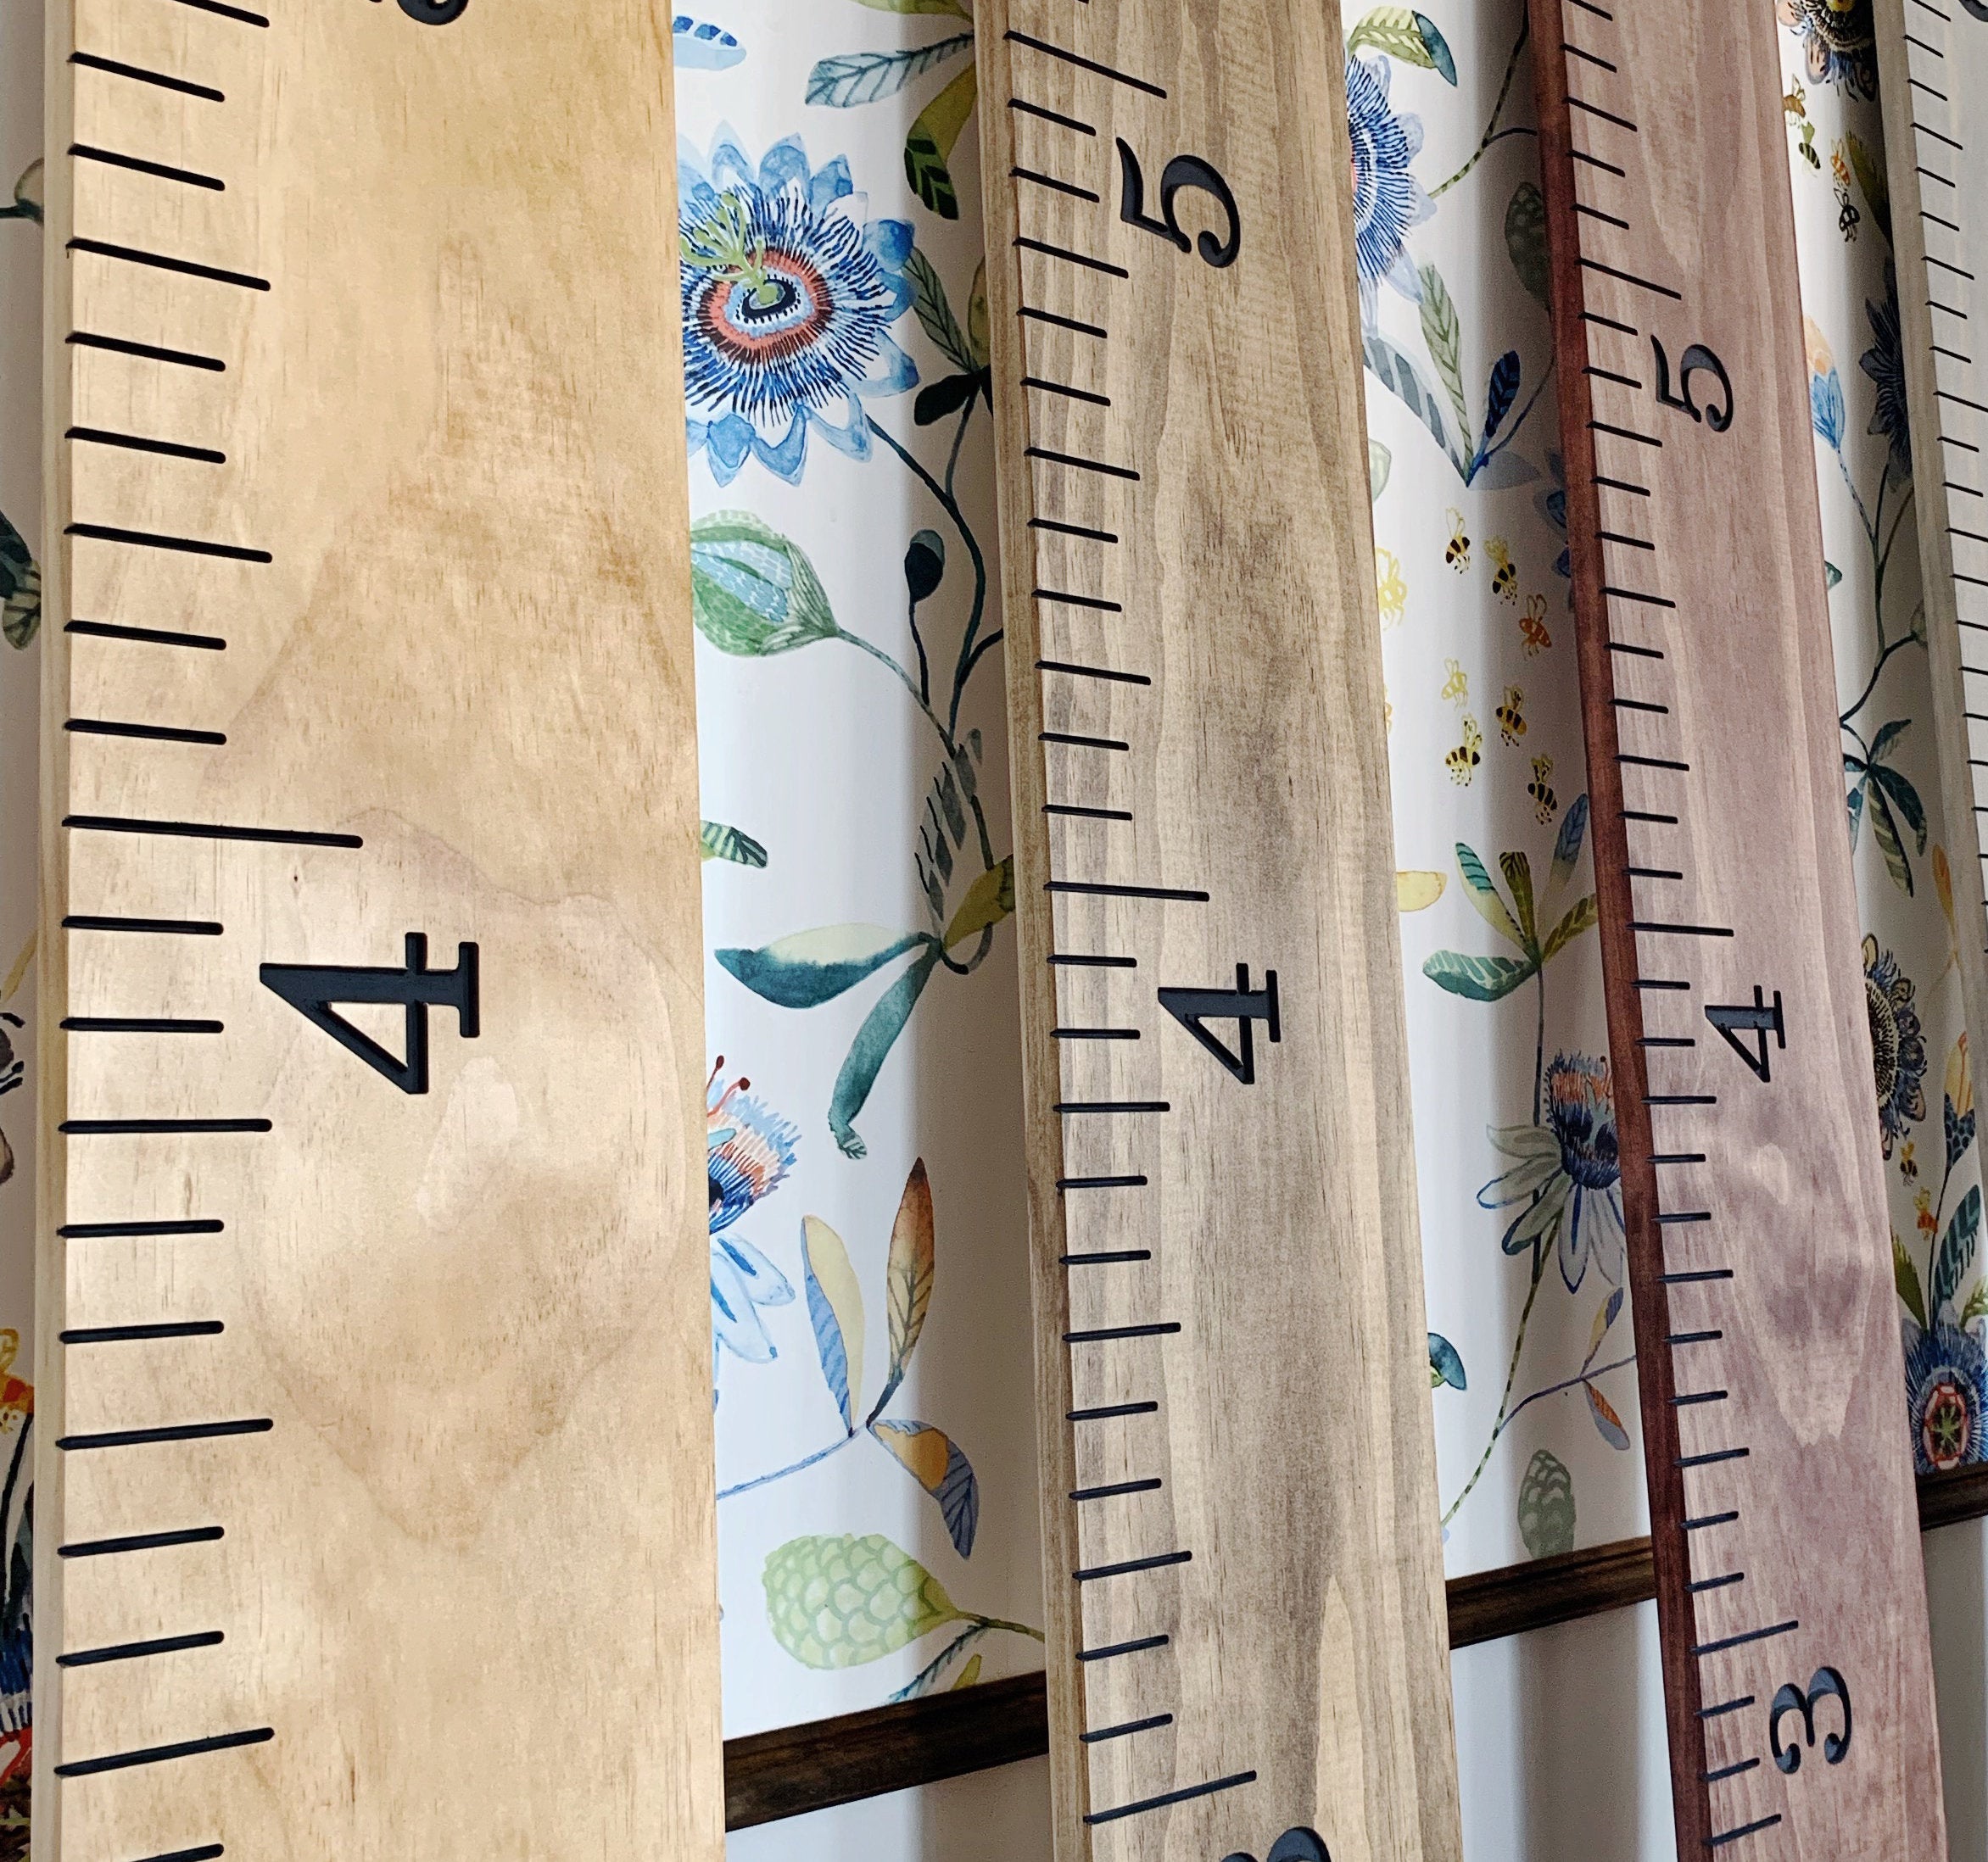 6 Inch Ruler Measurements